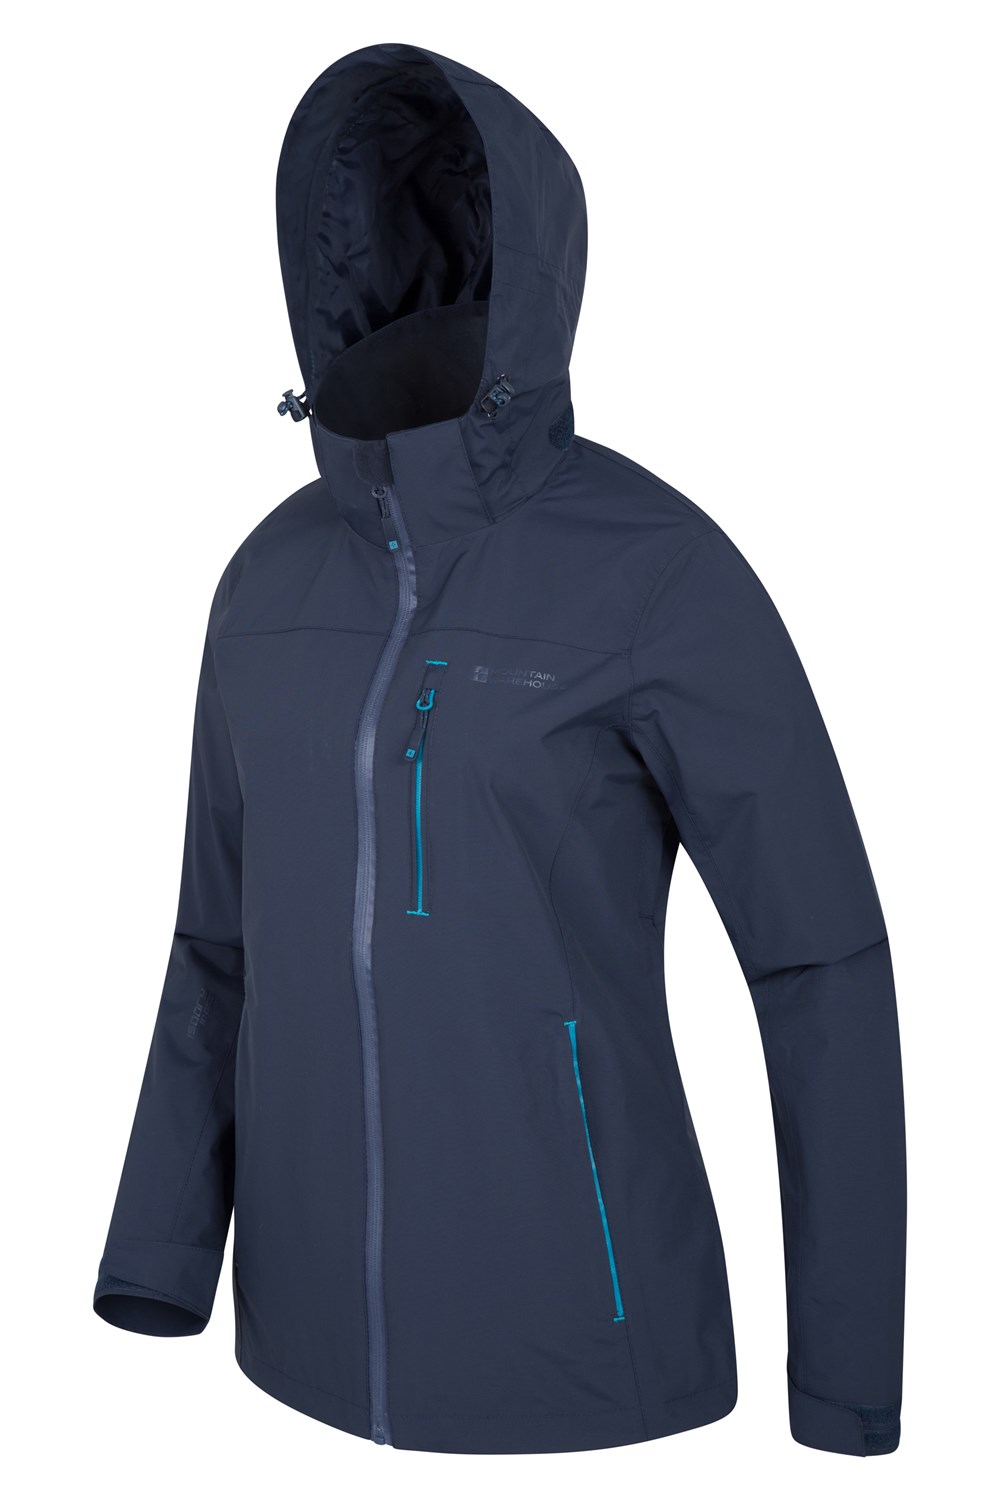 Mountain Warehouse Rainforest Waterproof Womens Jacket | eBay